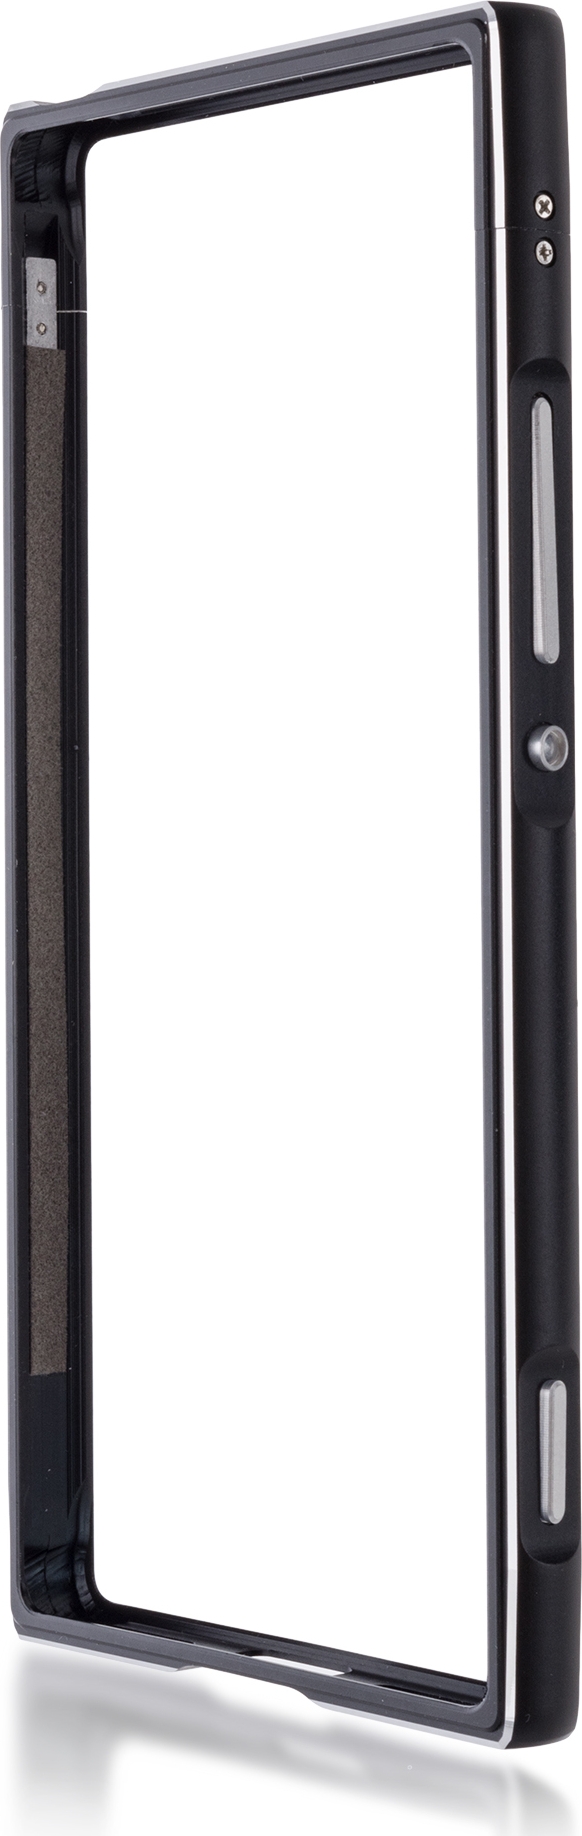 Чехол Brosco BMP для Sony Xperia XA1, черный